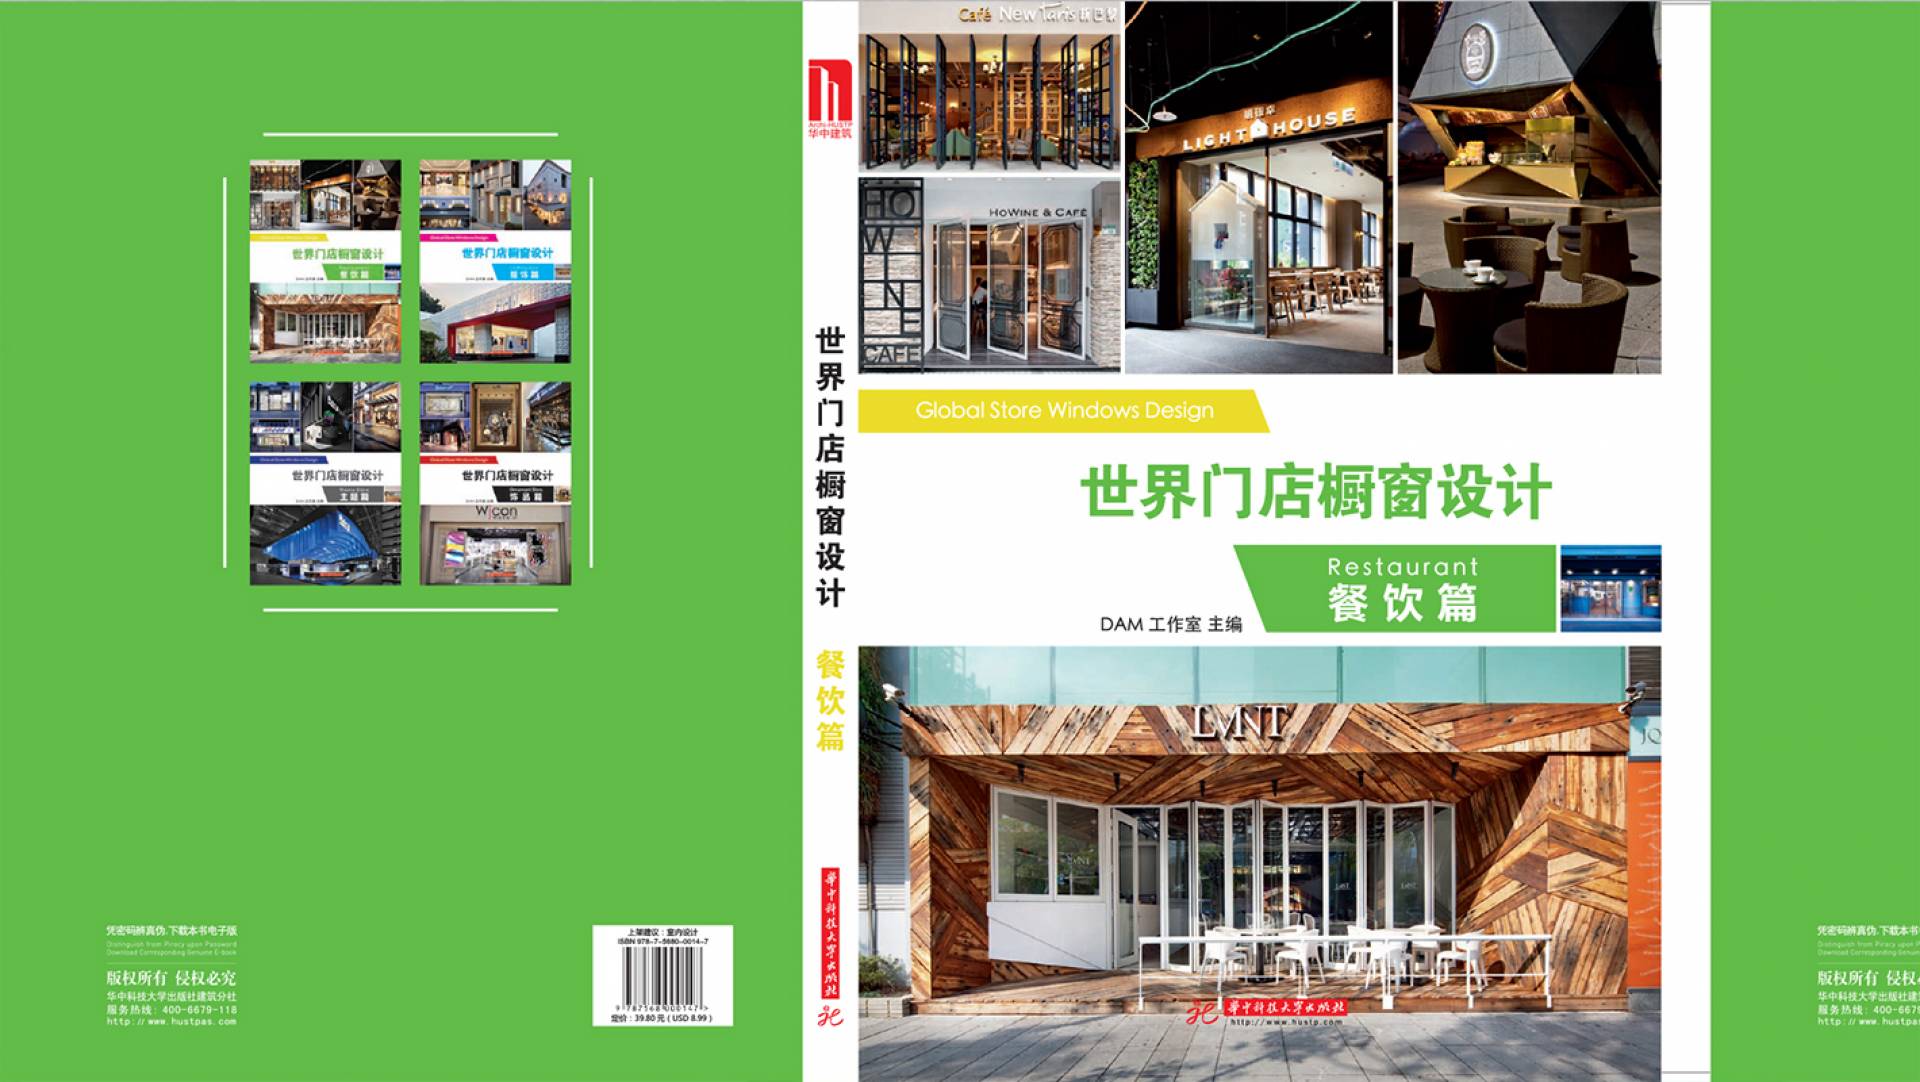 Global Store Windows Design Huazhong Press